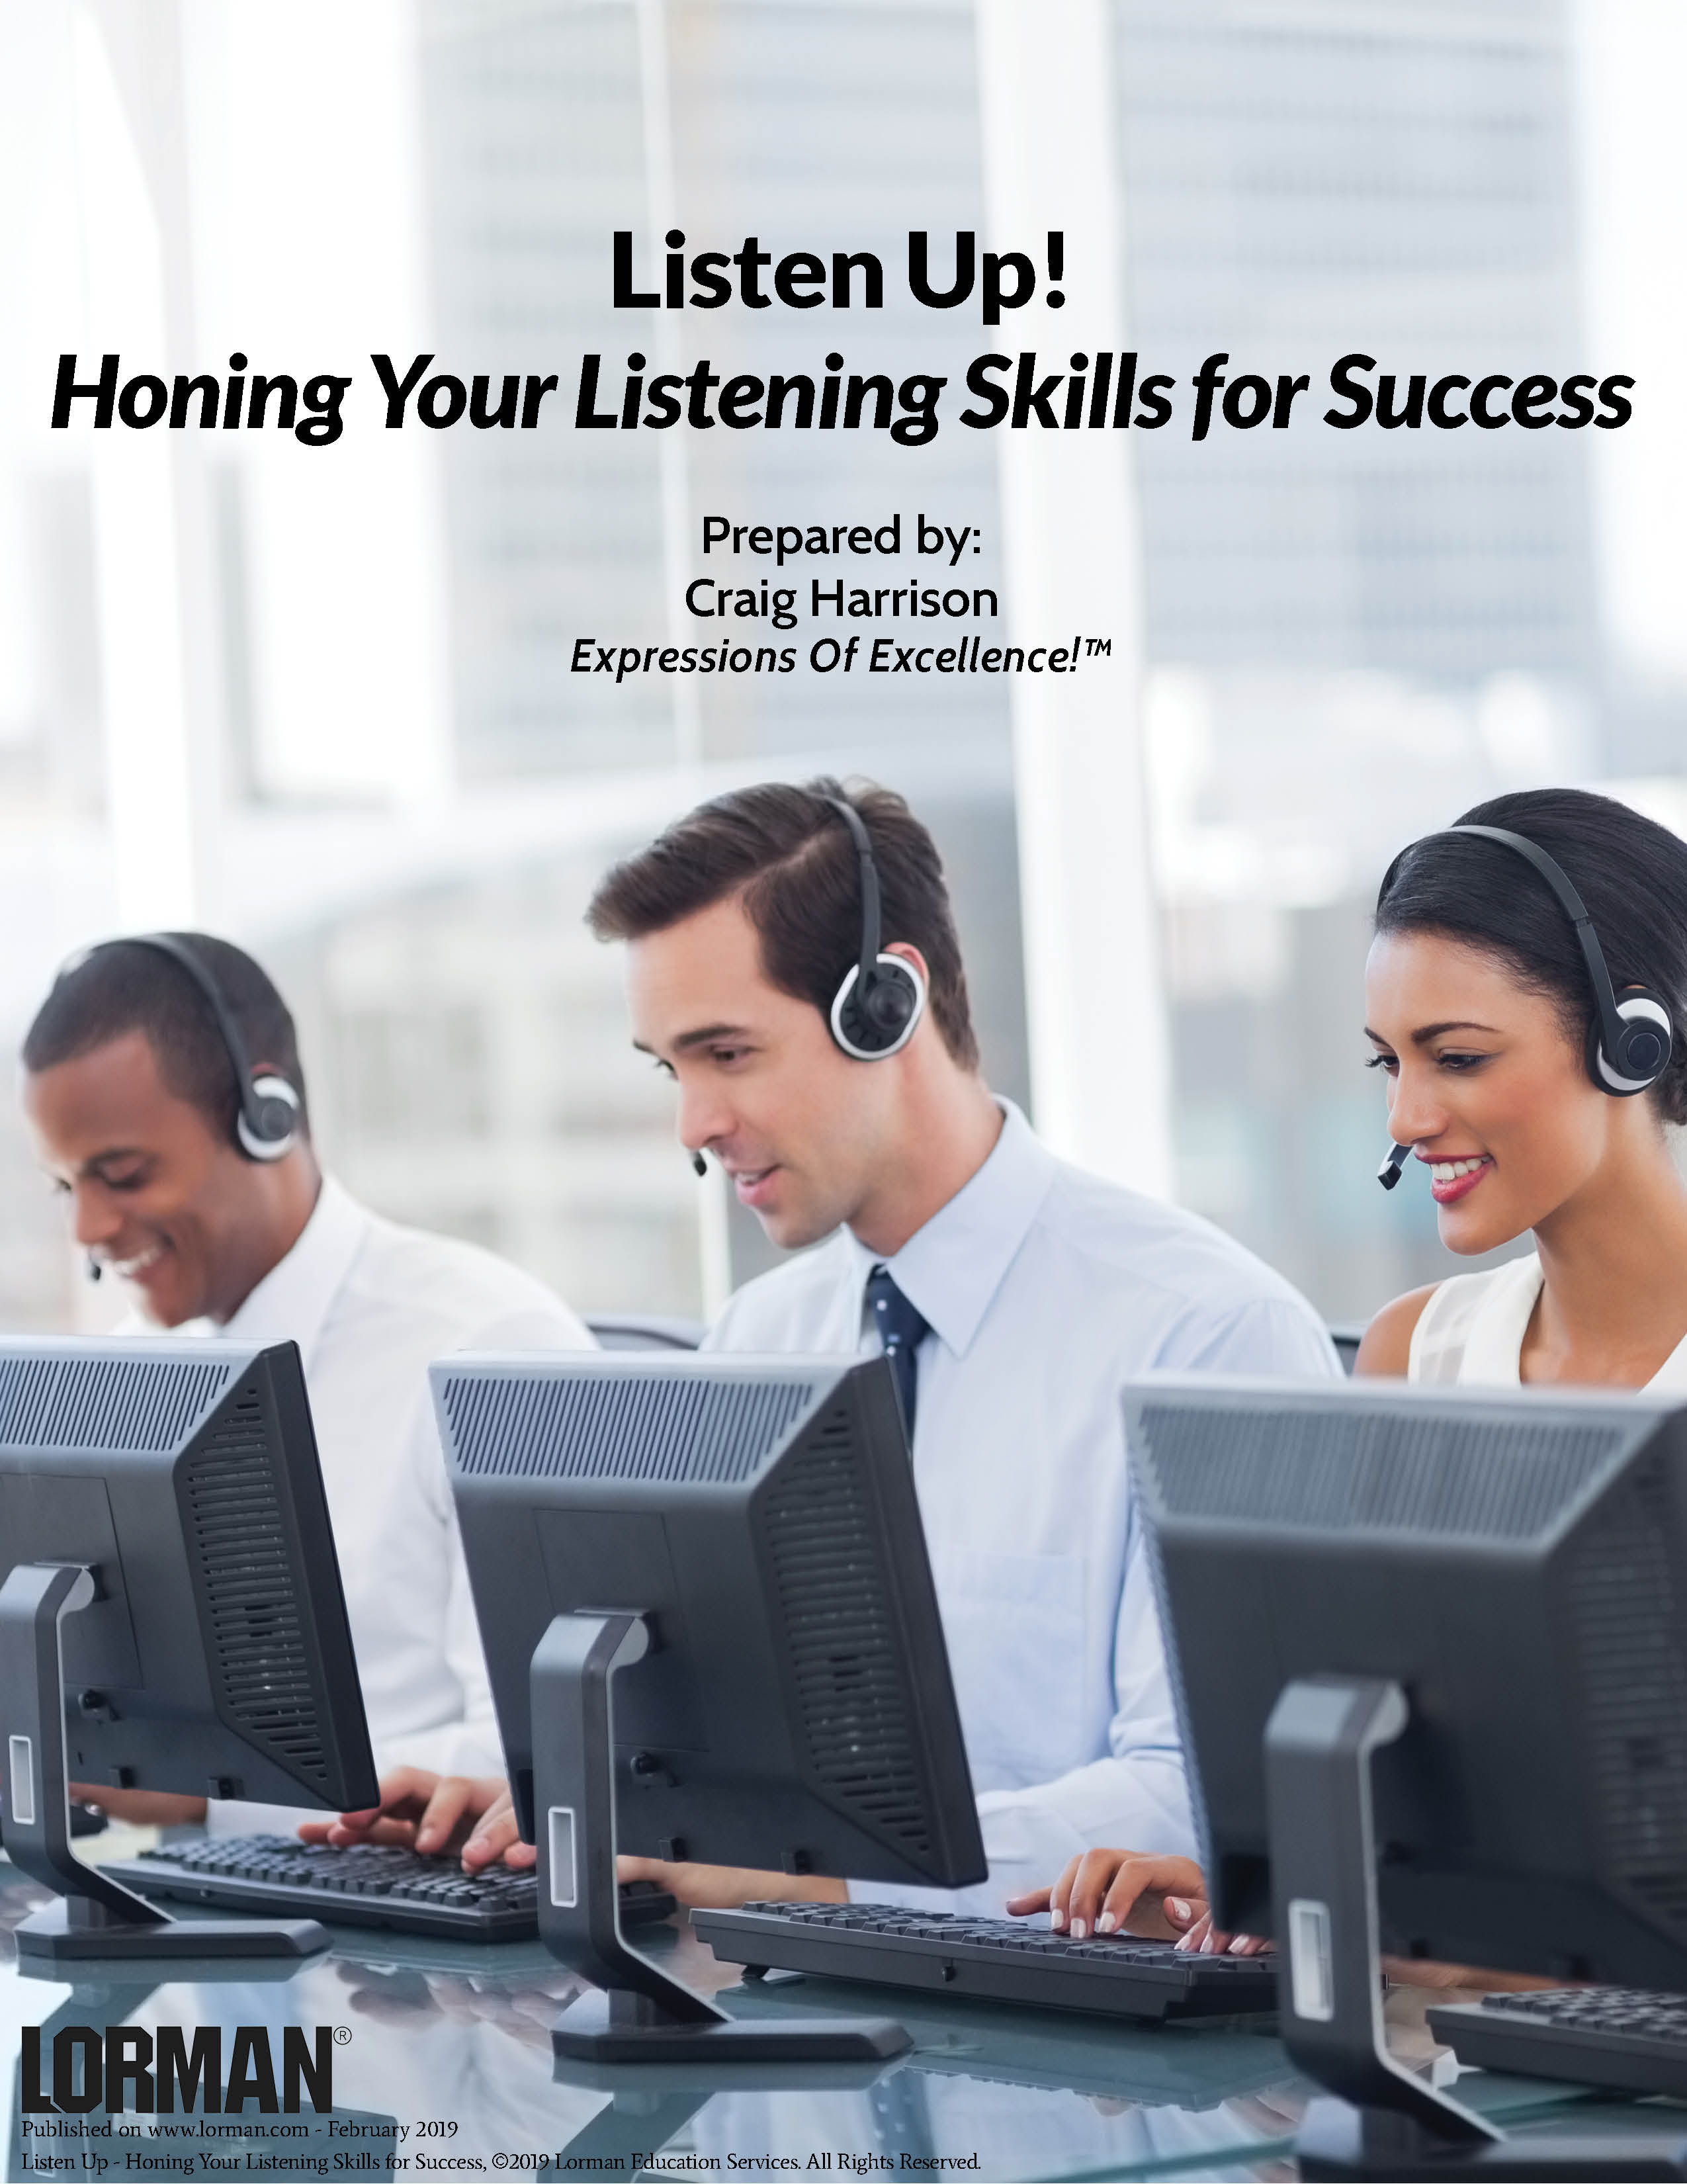 Listen Up - Honing Your Listening Skills for Success